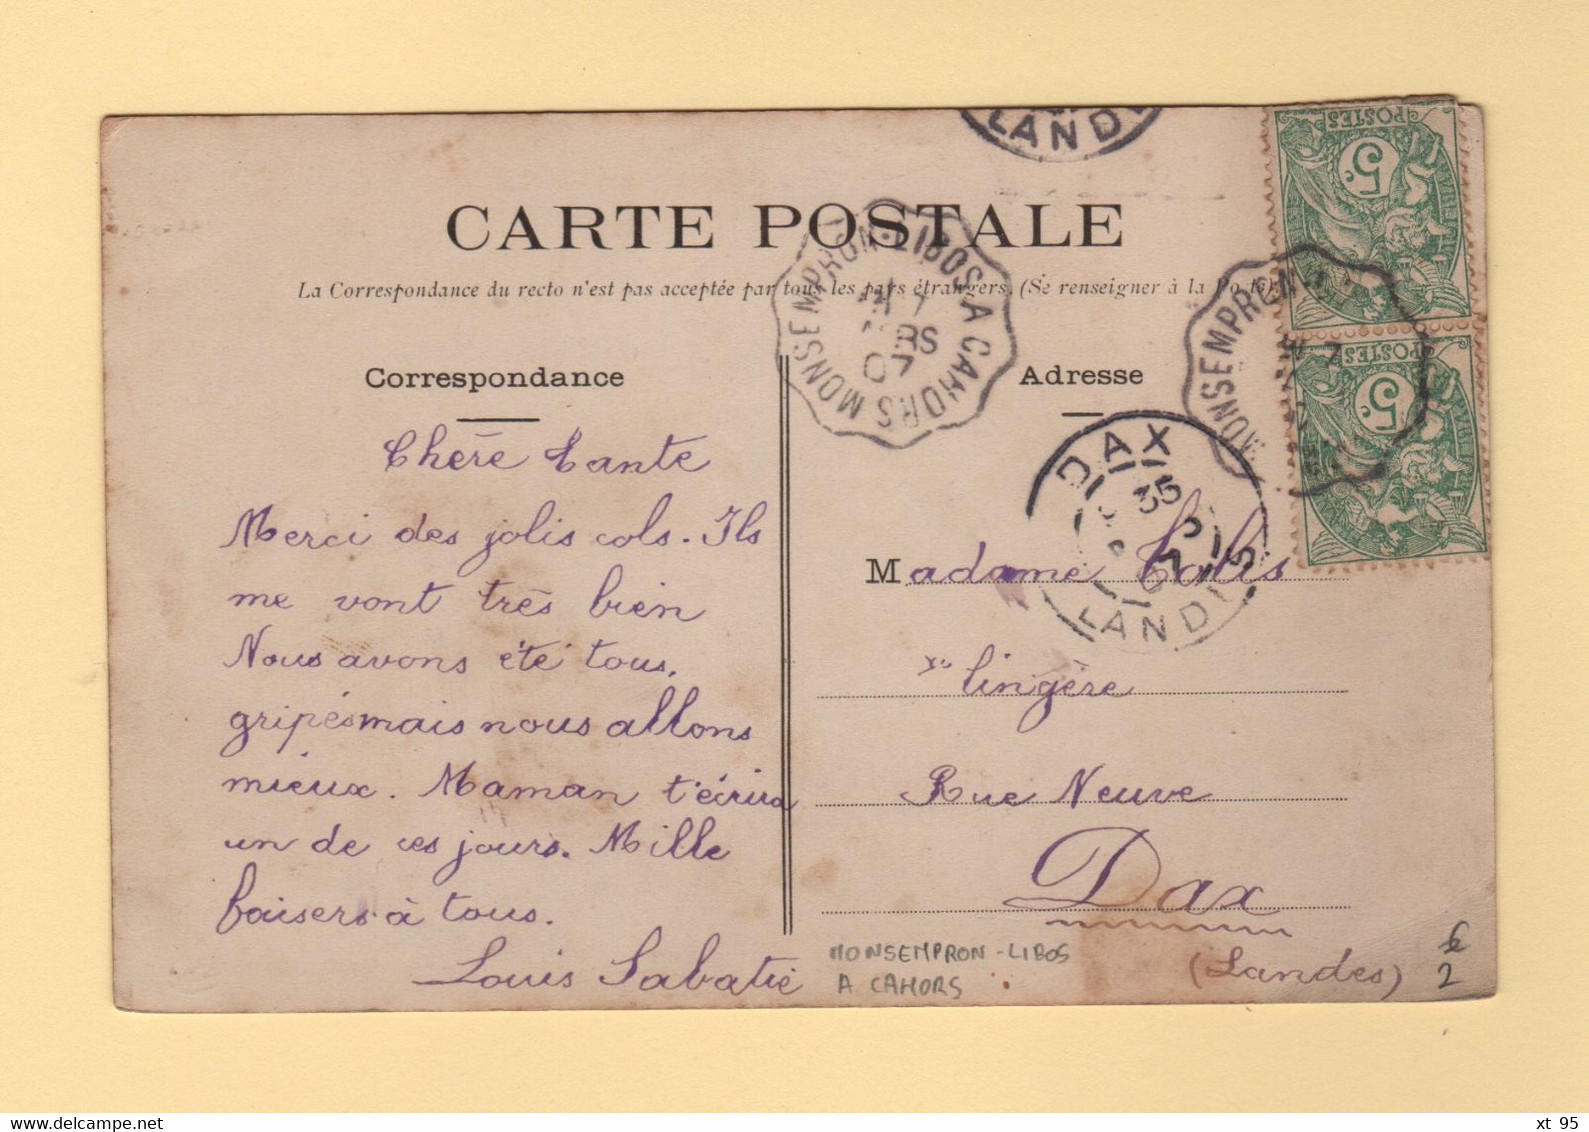 Convoyeur - Monsempron Libos A Cahors - 1907 - Type Blanc - Cpa Puy L Eveque - Railway Post